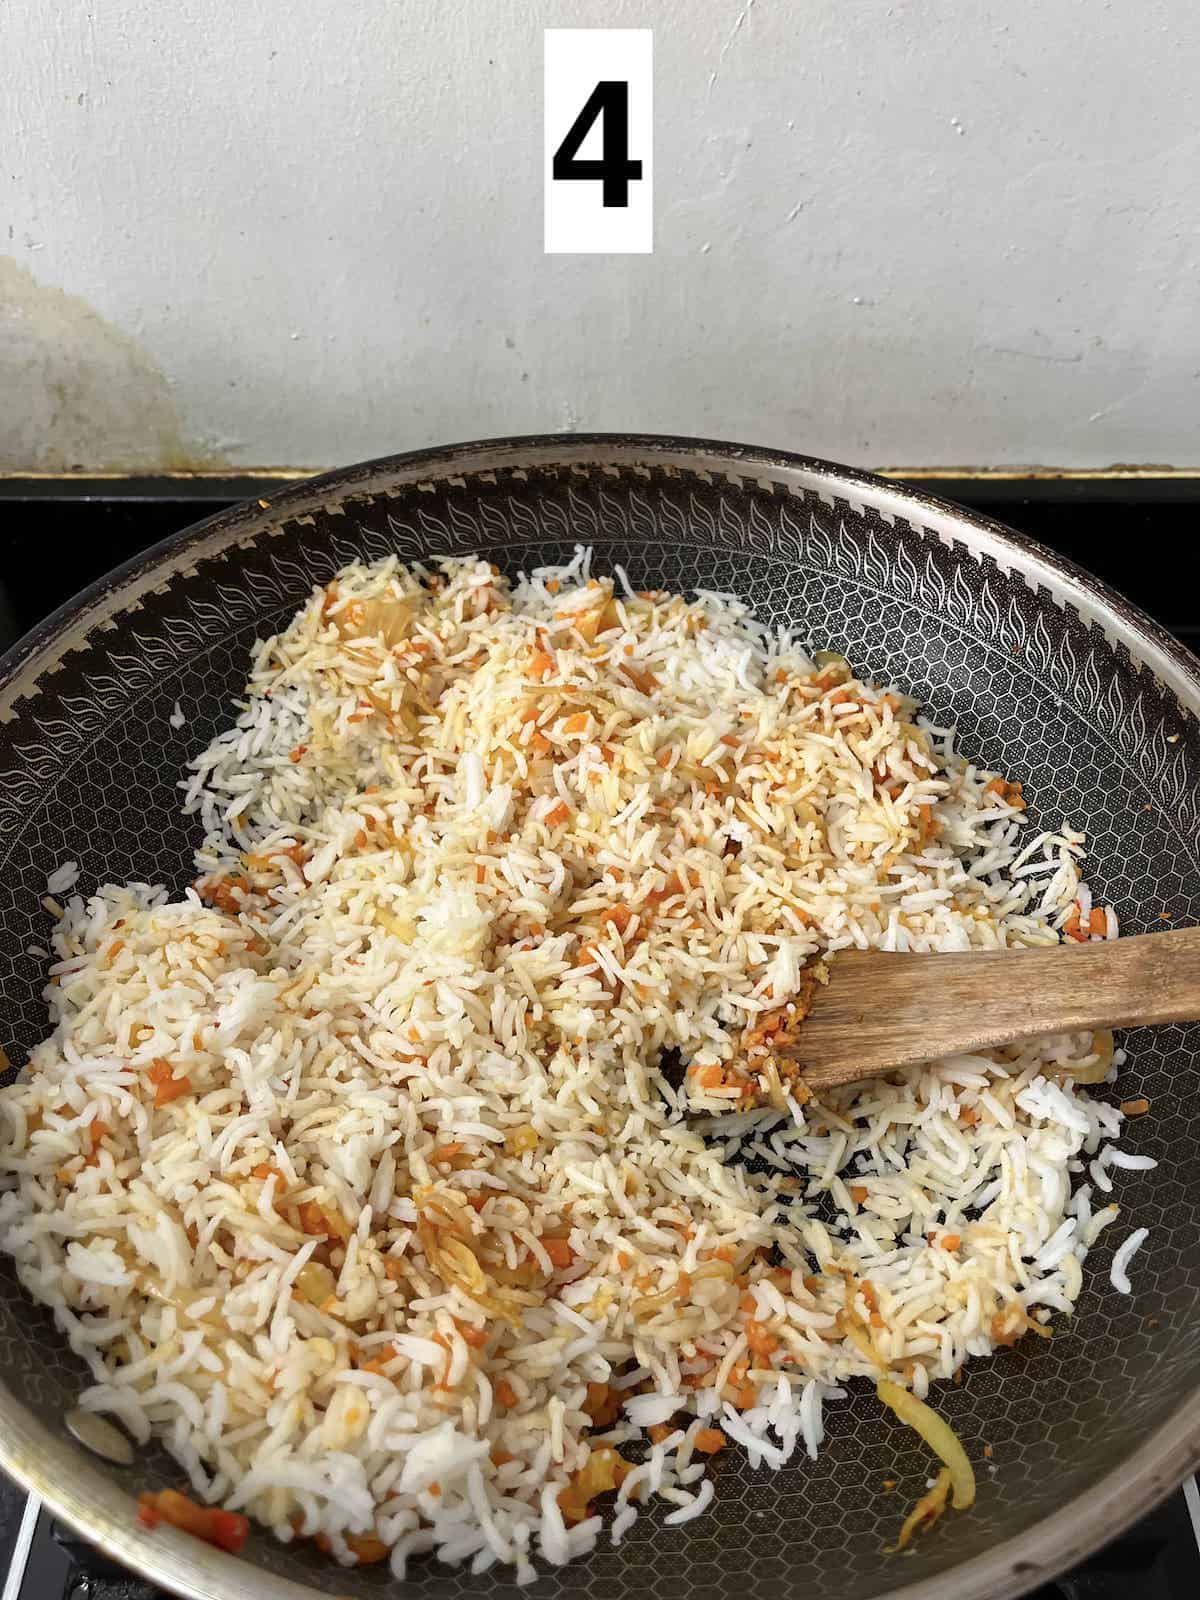 Stir-frying rice in a wok.